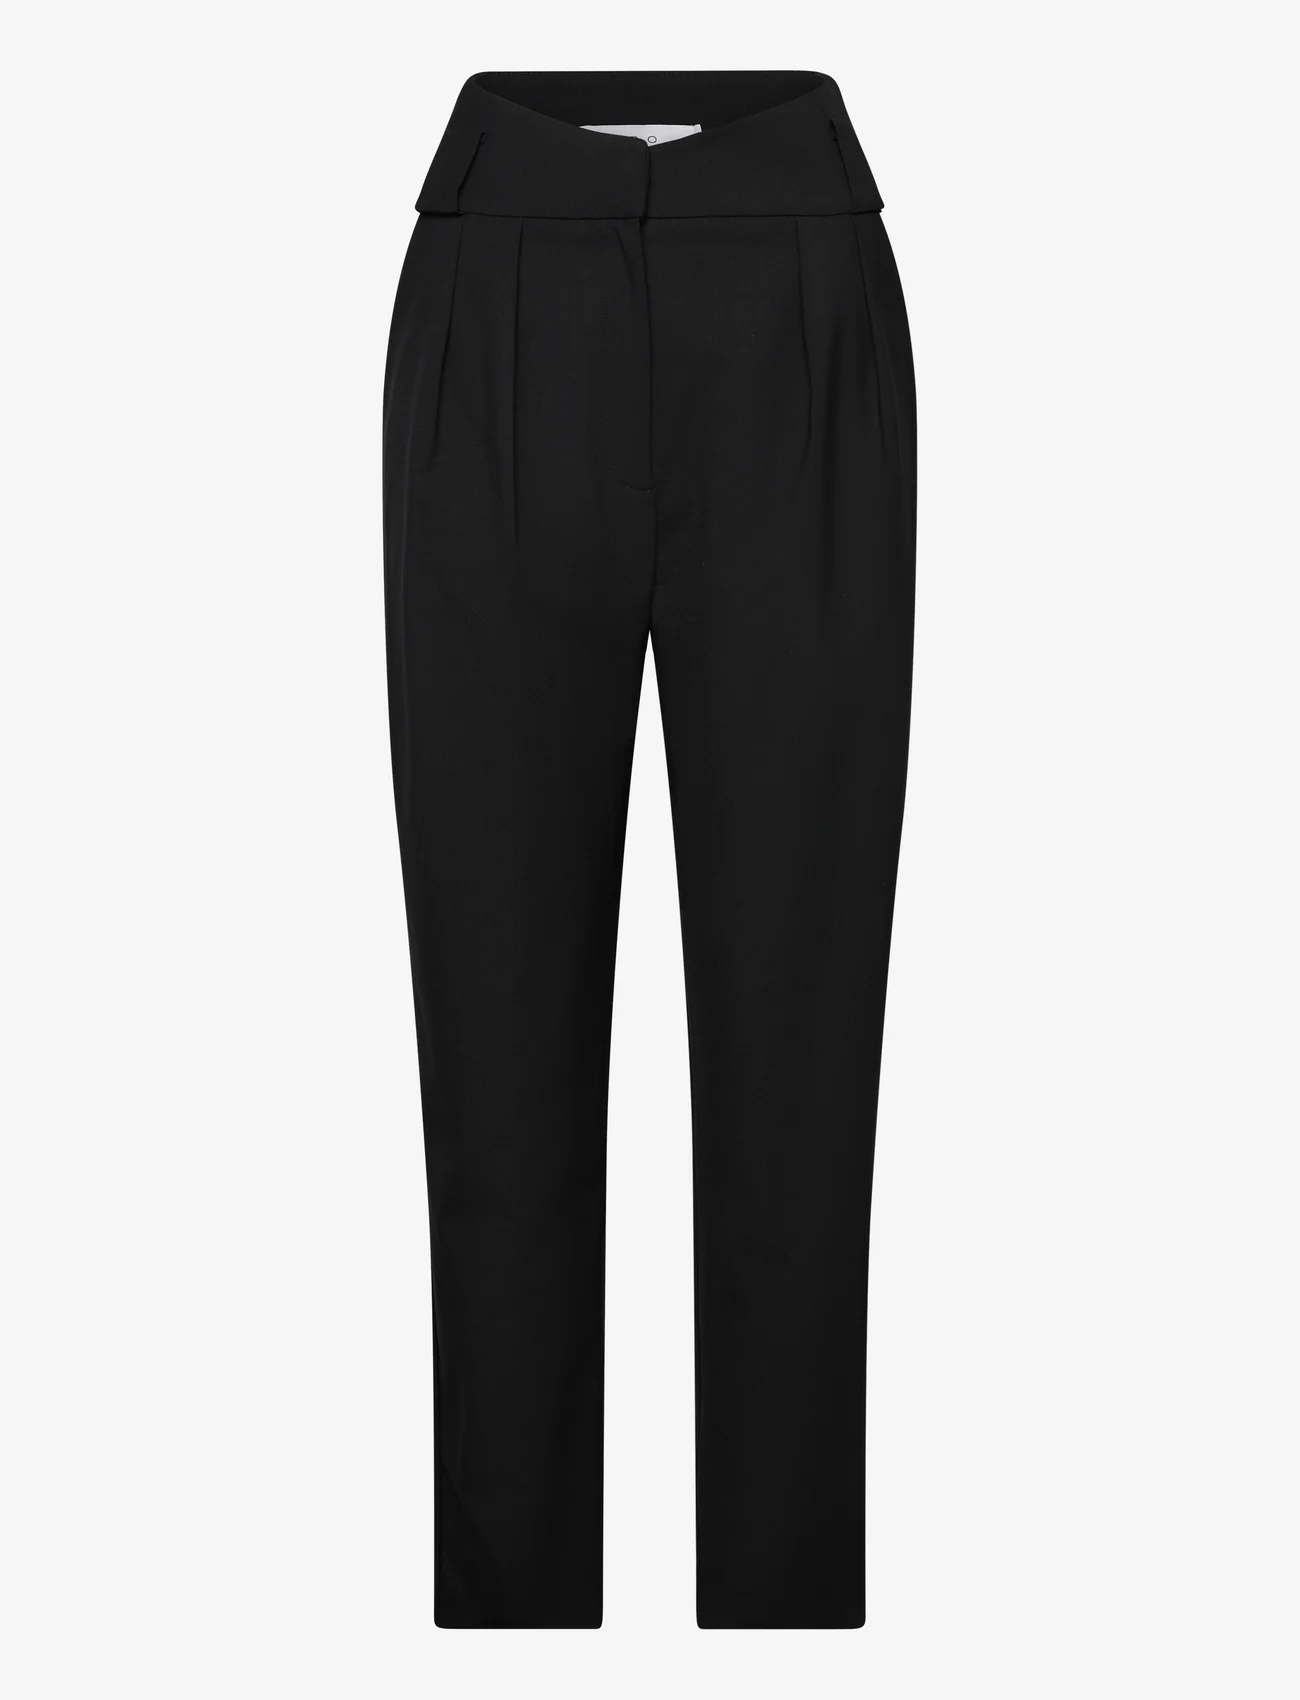 IRO - IJONAC - tailored trousers - black - 0